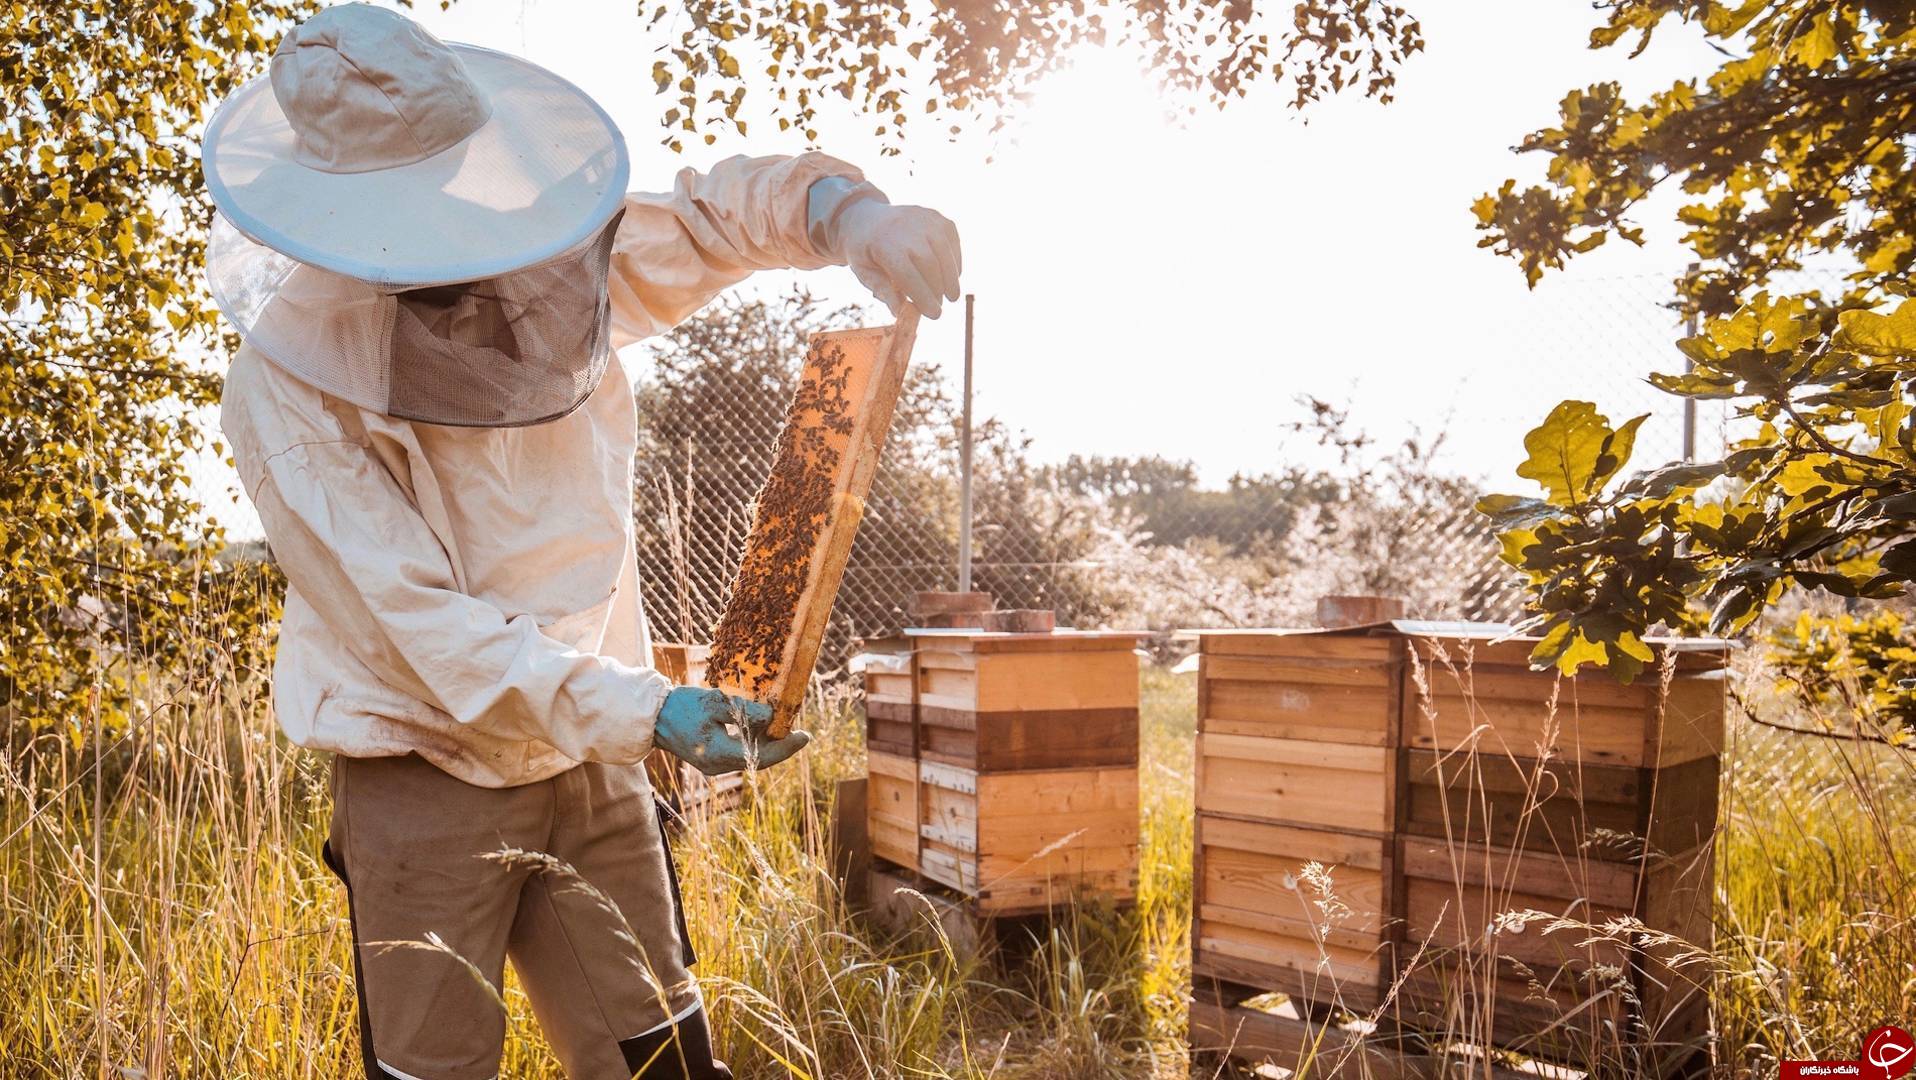 عسل طبیعی با طعم پورشه+تصاویر